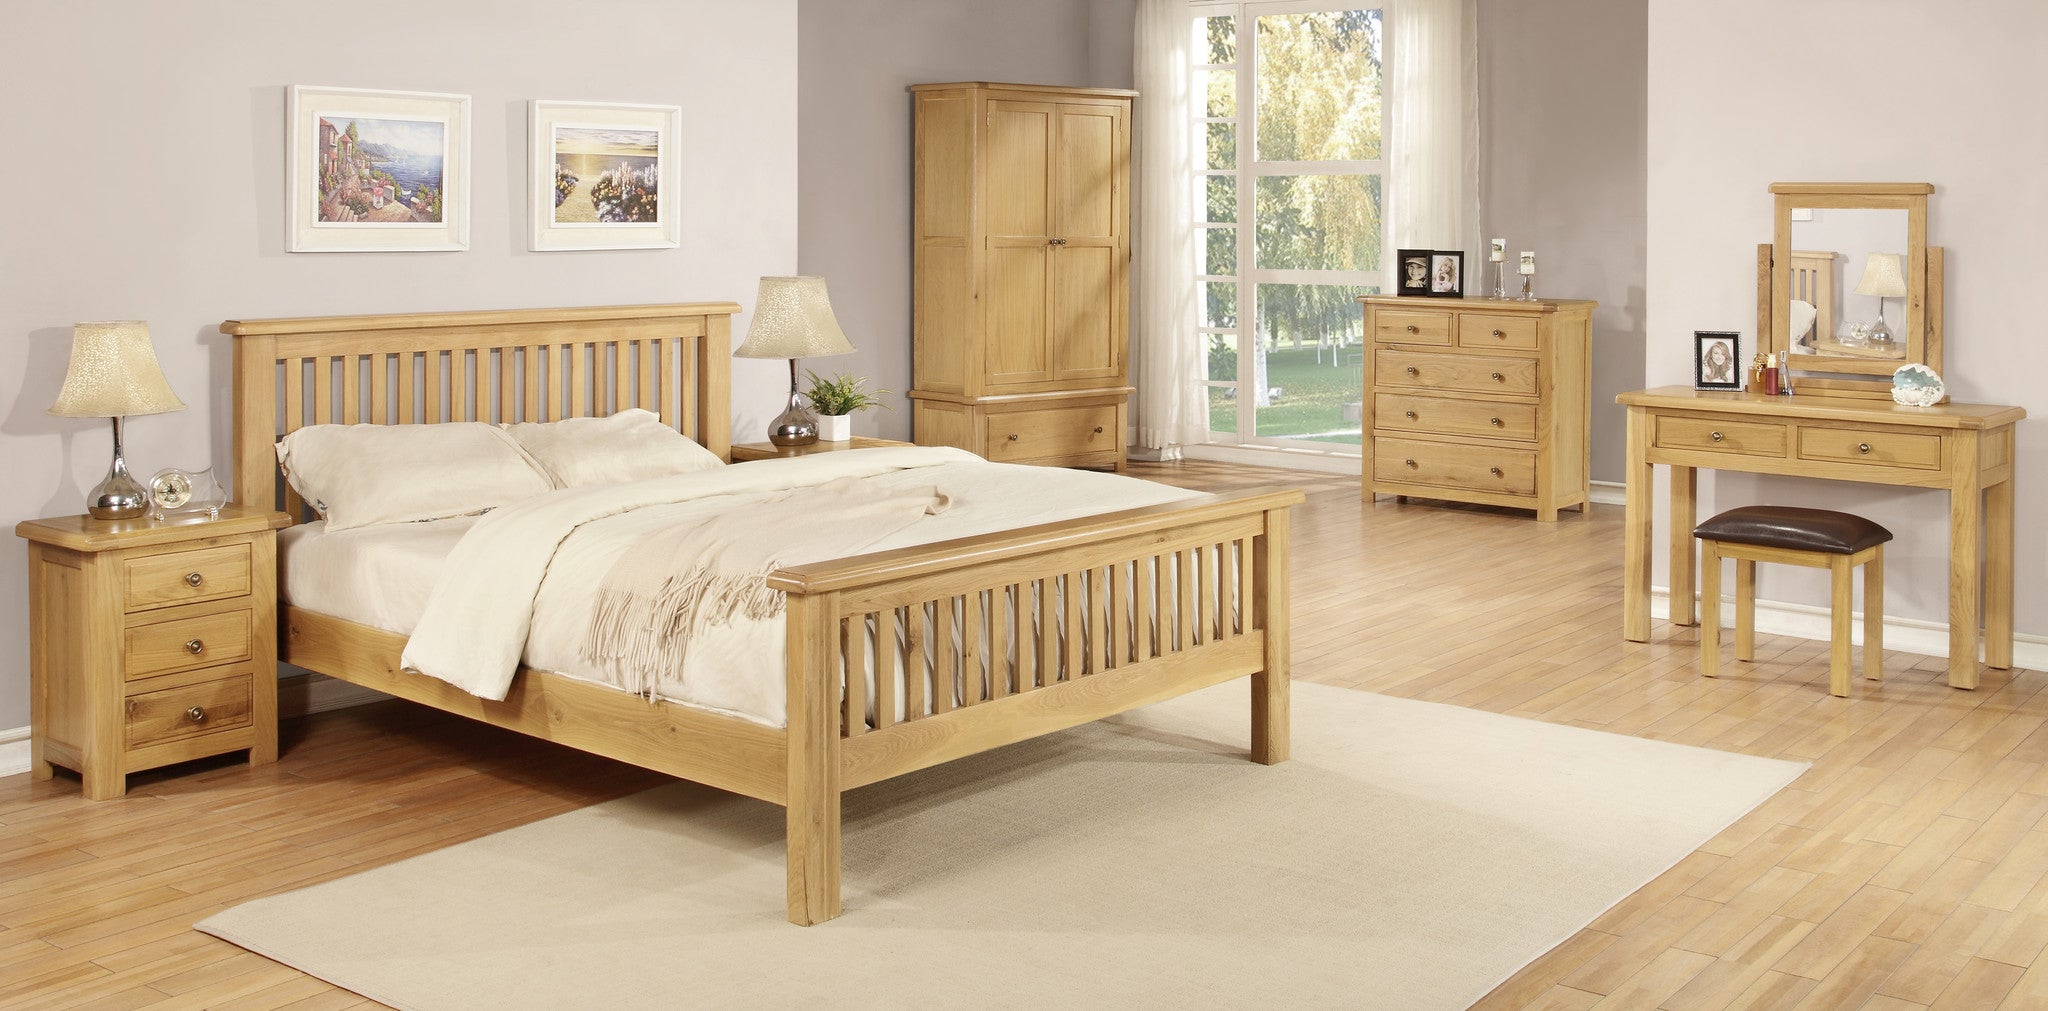 Stratton Oak Bedroom furniture